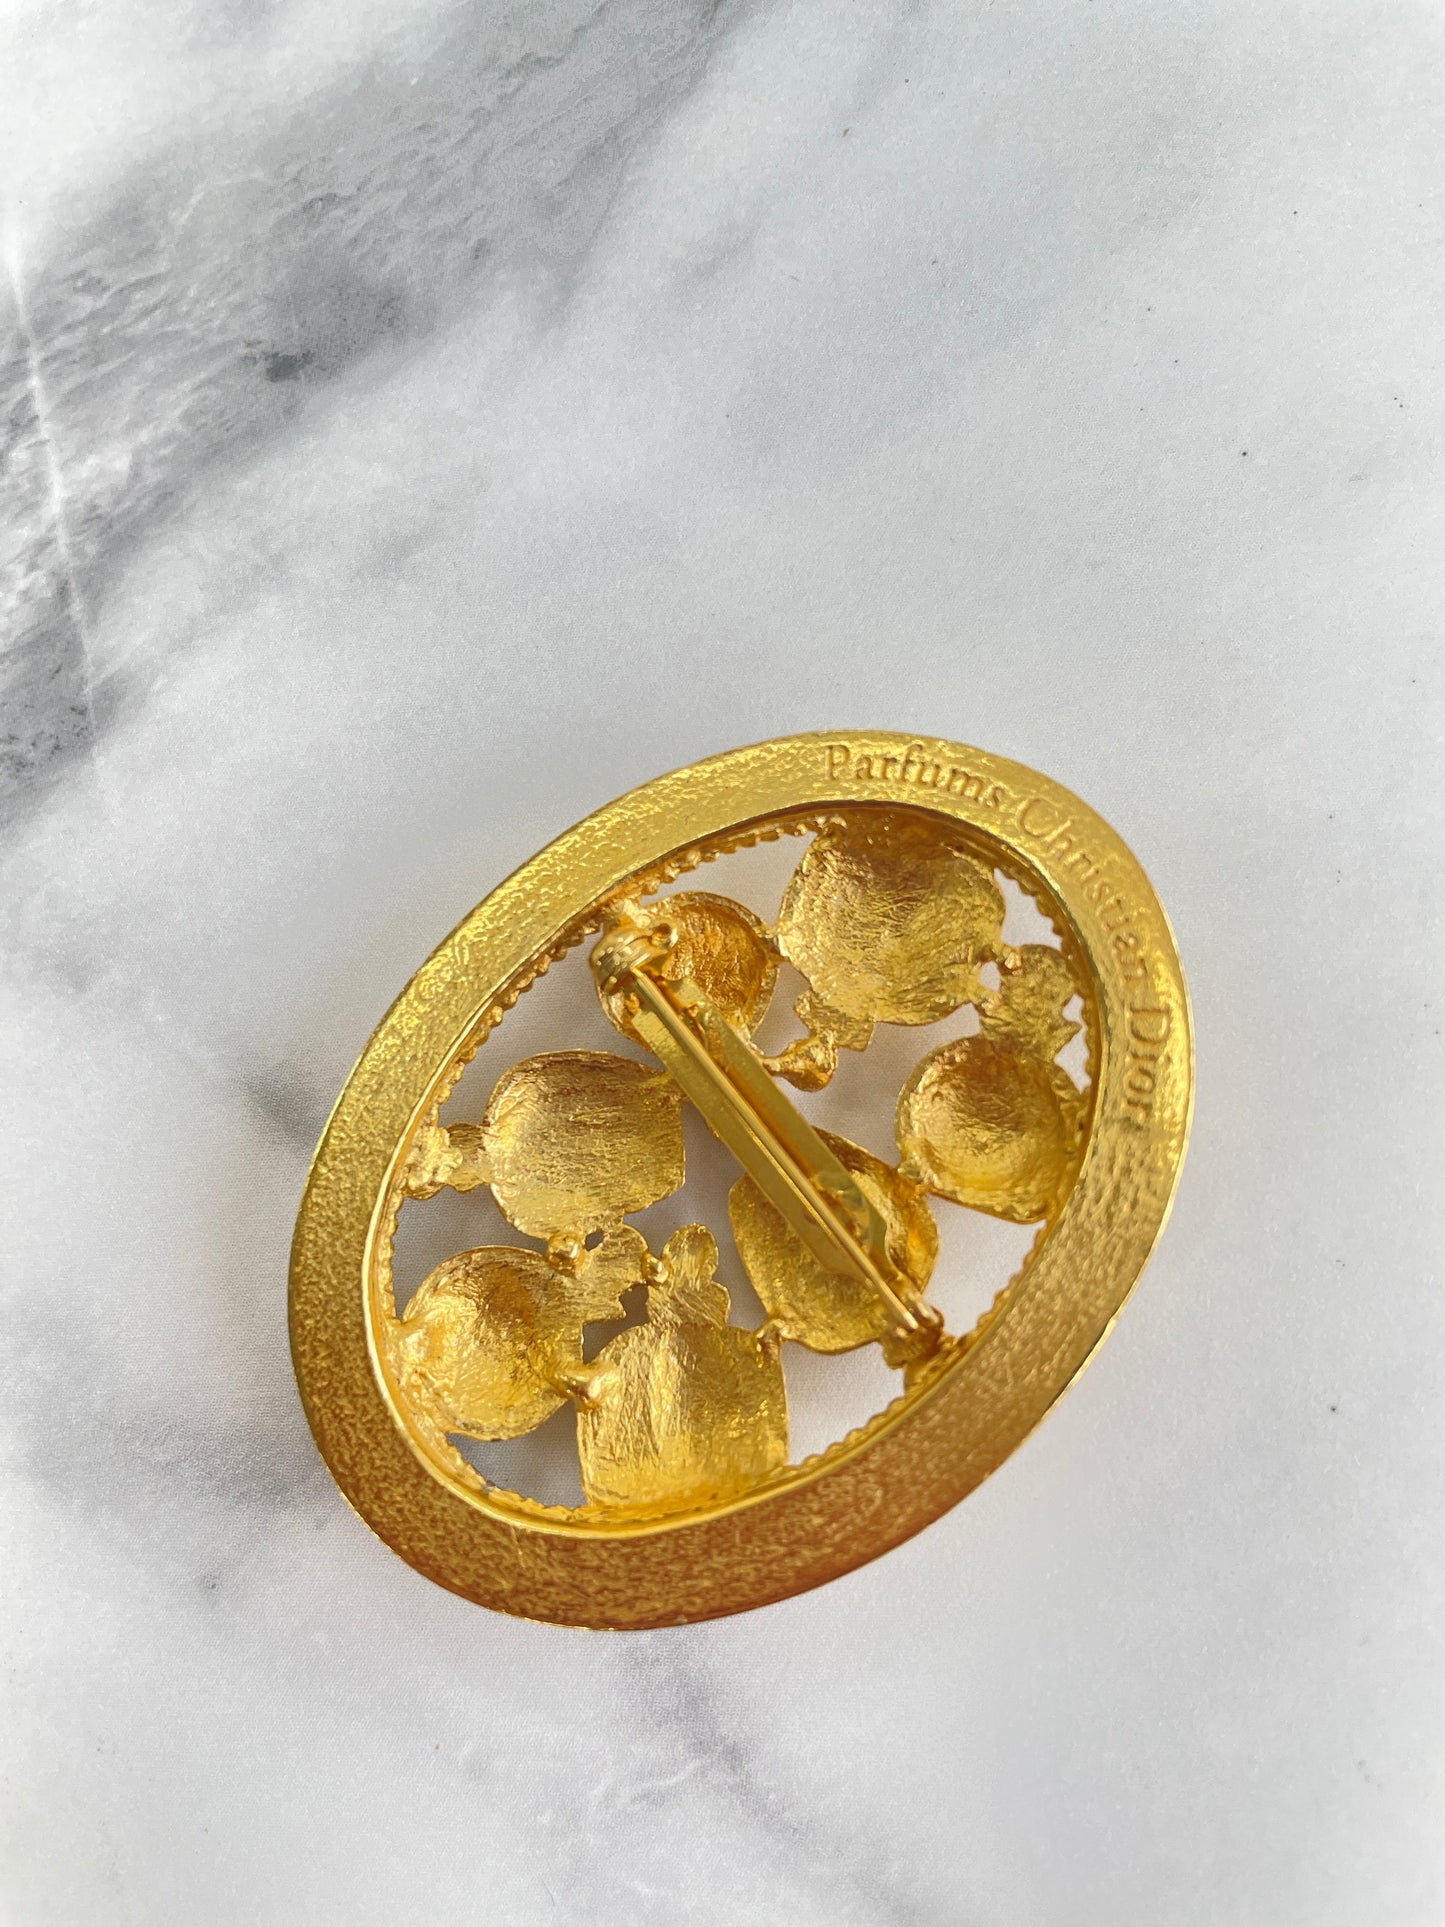 Christian Dior Perfumes motif Brooch Gold Accessory 7nrpyh